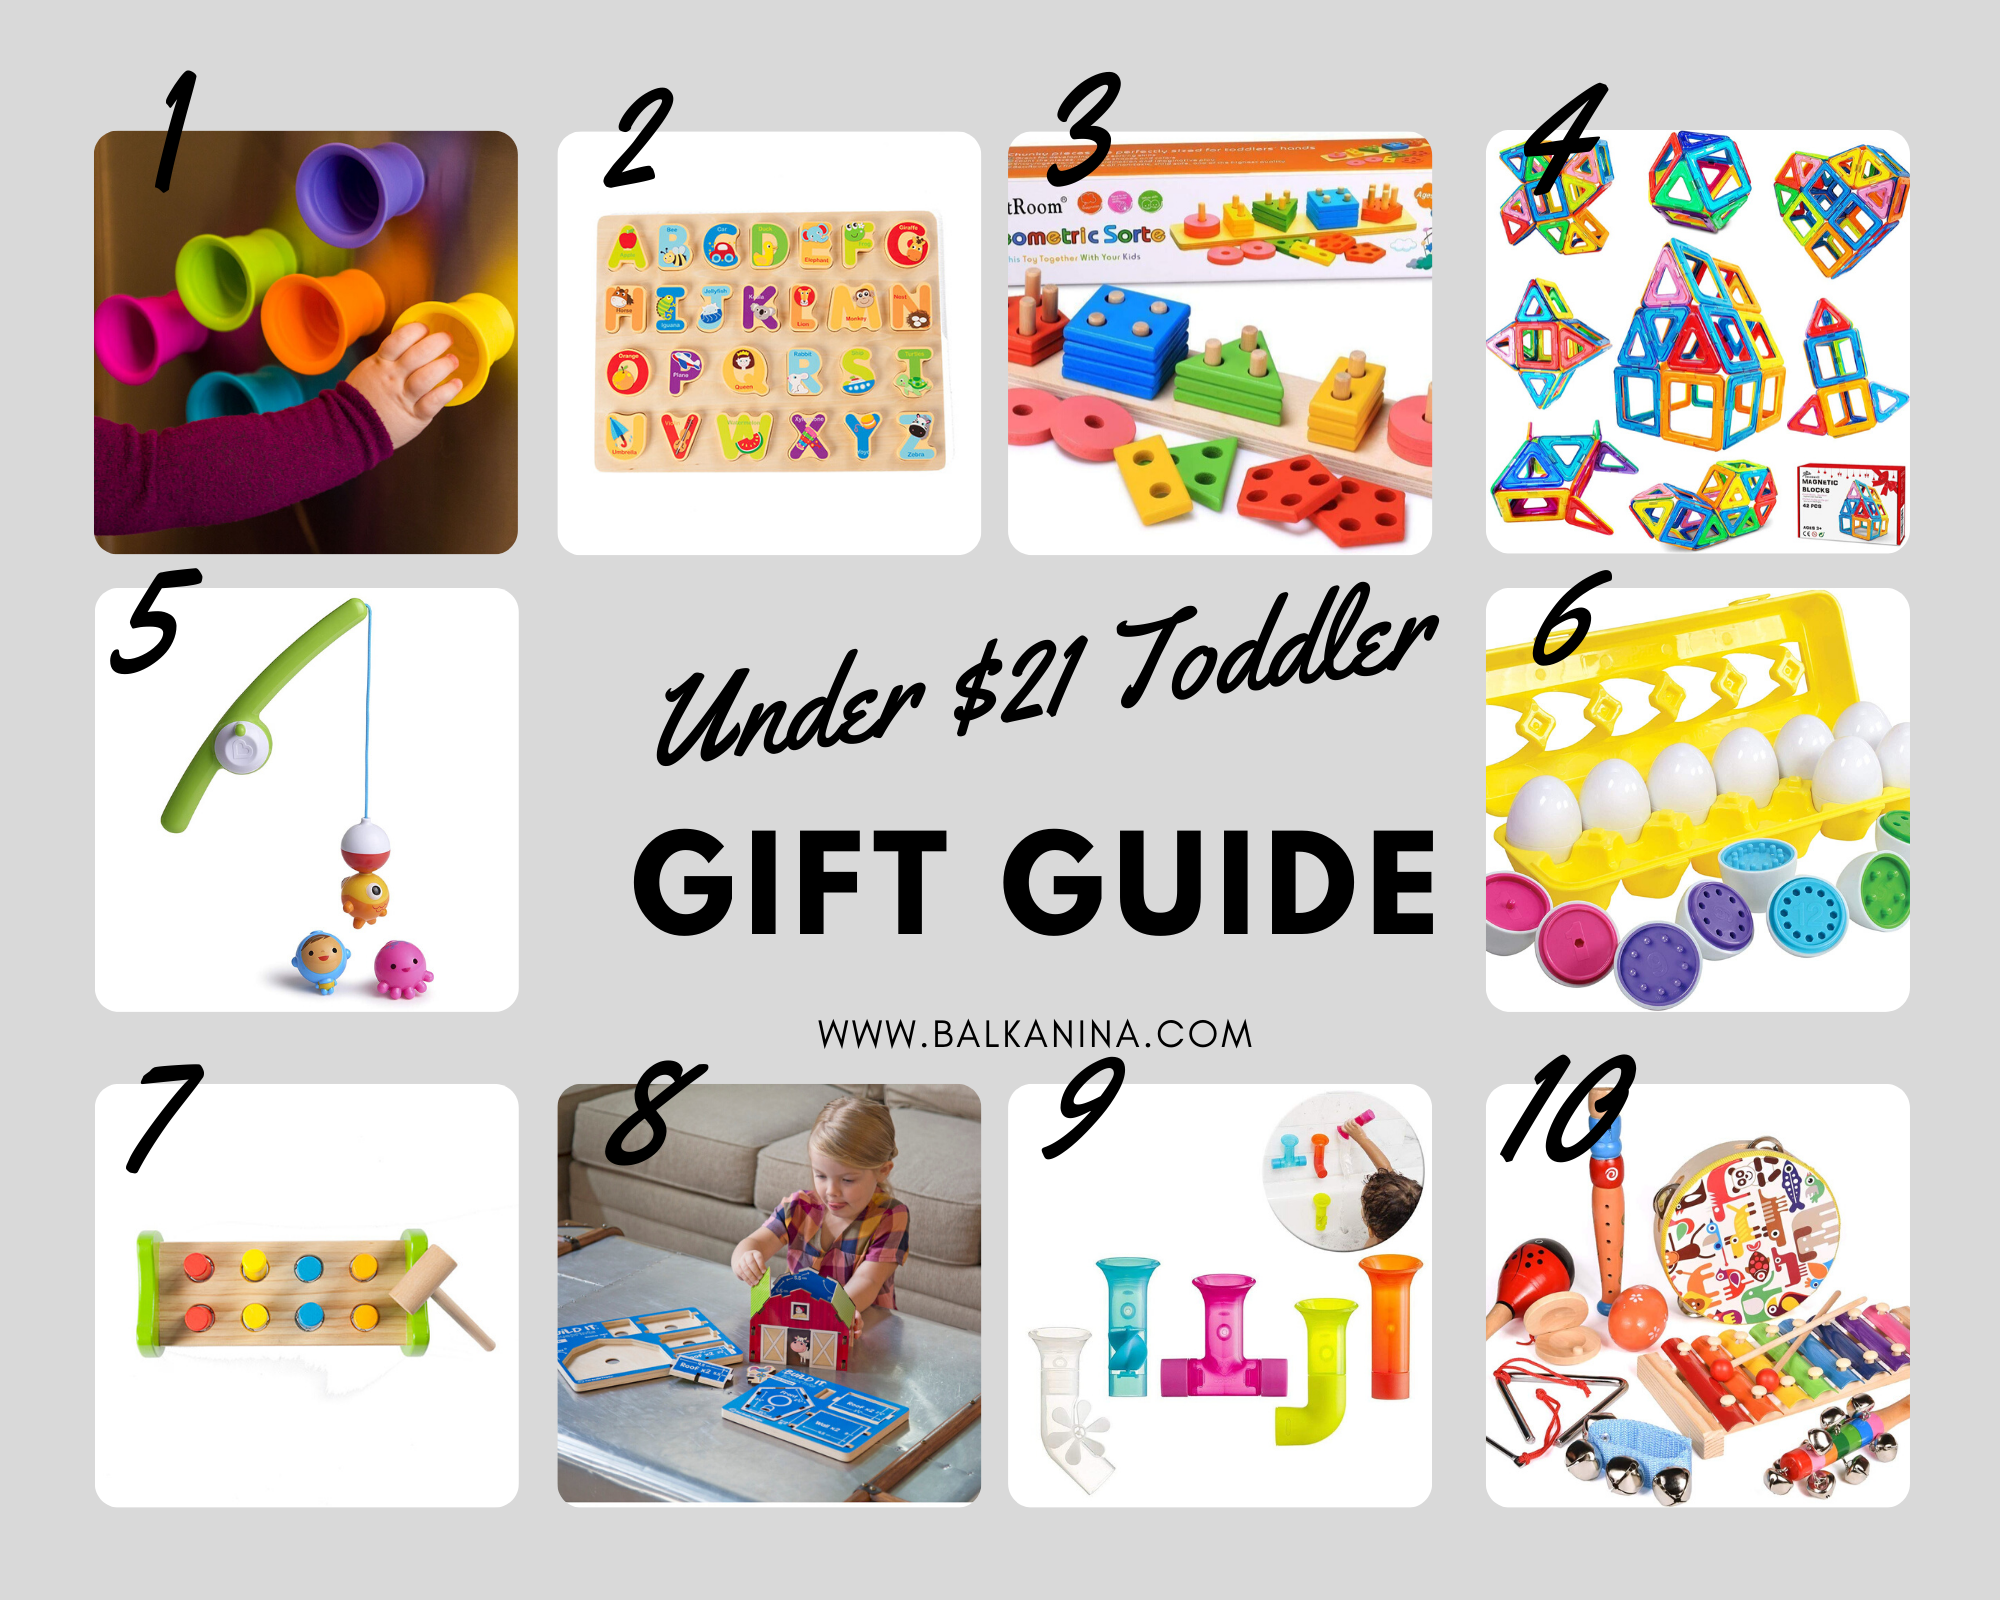 Toddler Under $21 Gift Guide